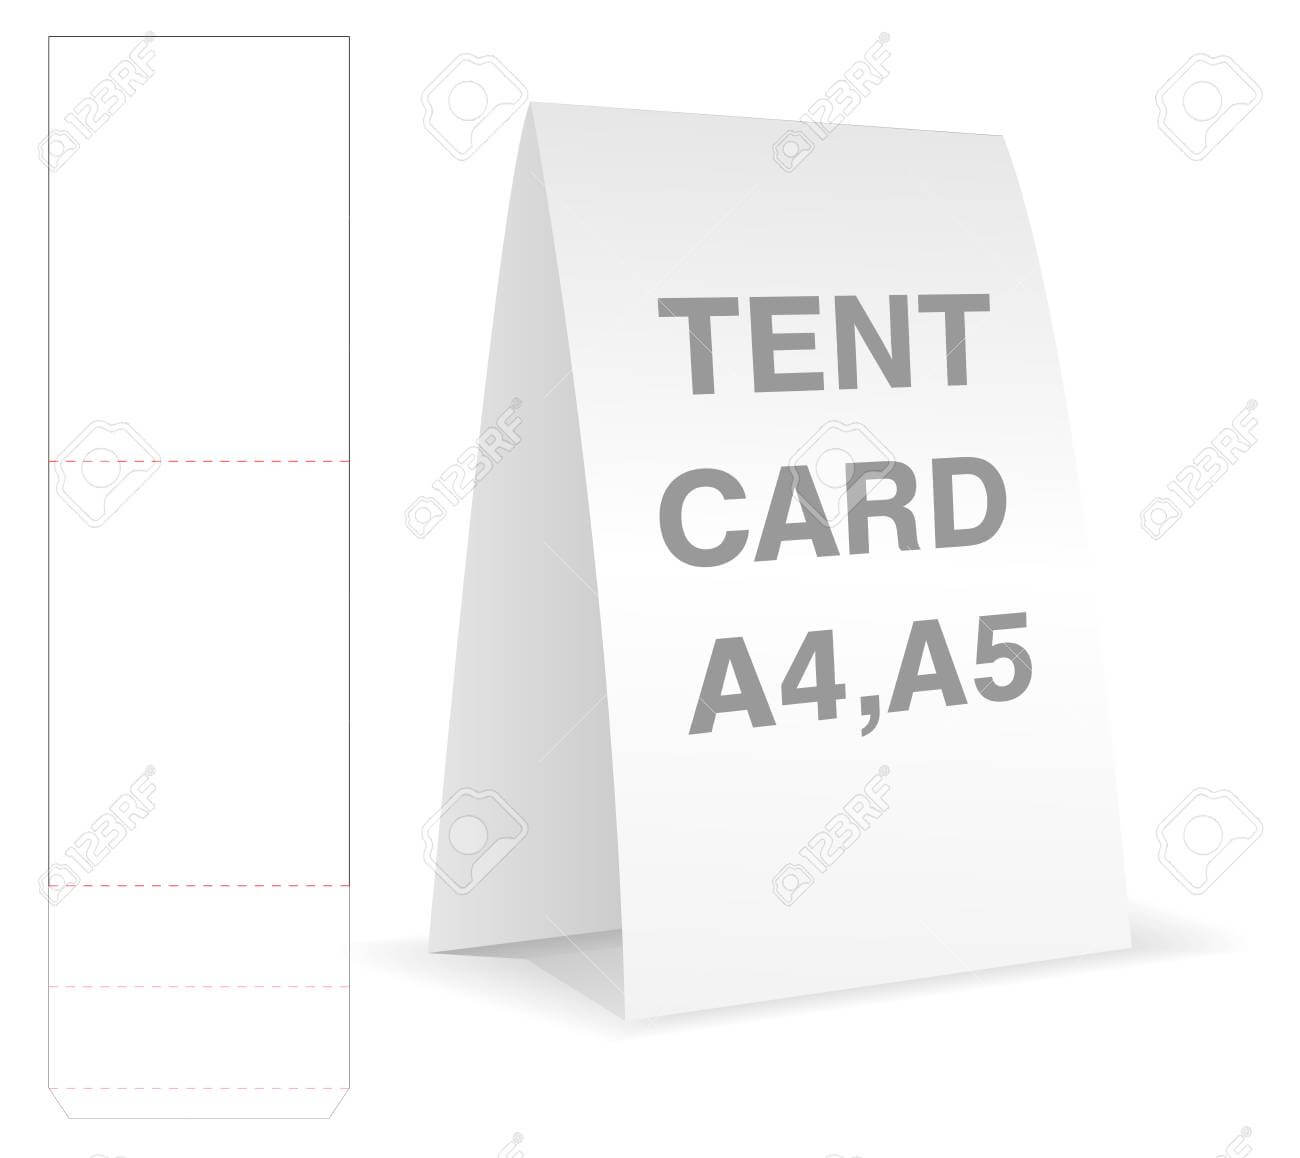 Tent Card Die Cut Mock Up Template Vector. Regarding Free Tent Card Template Downloads